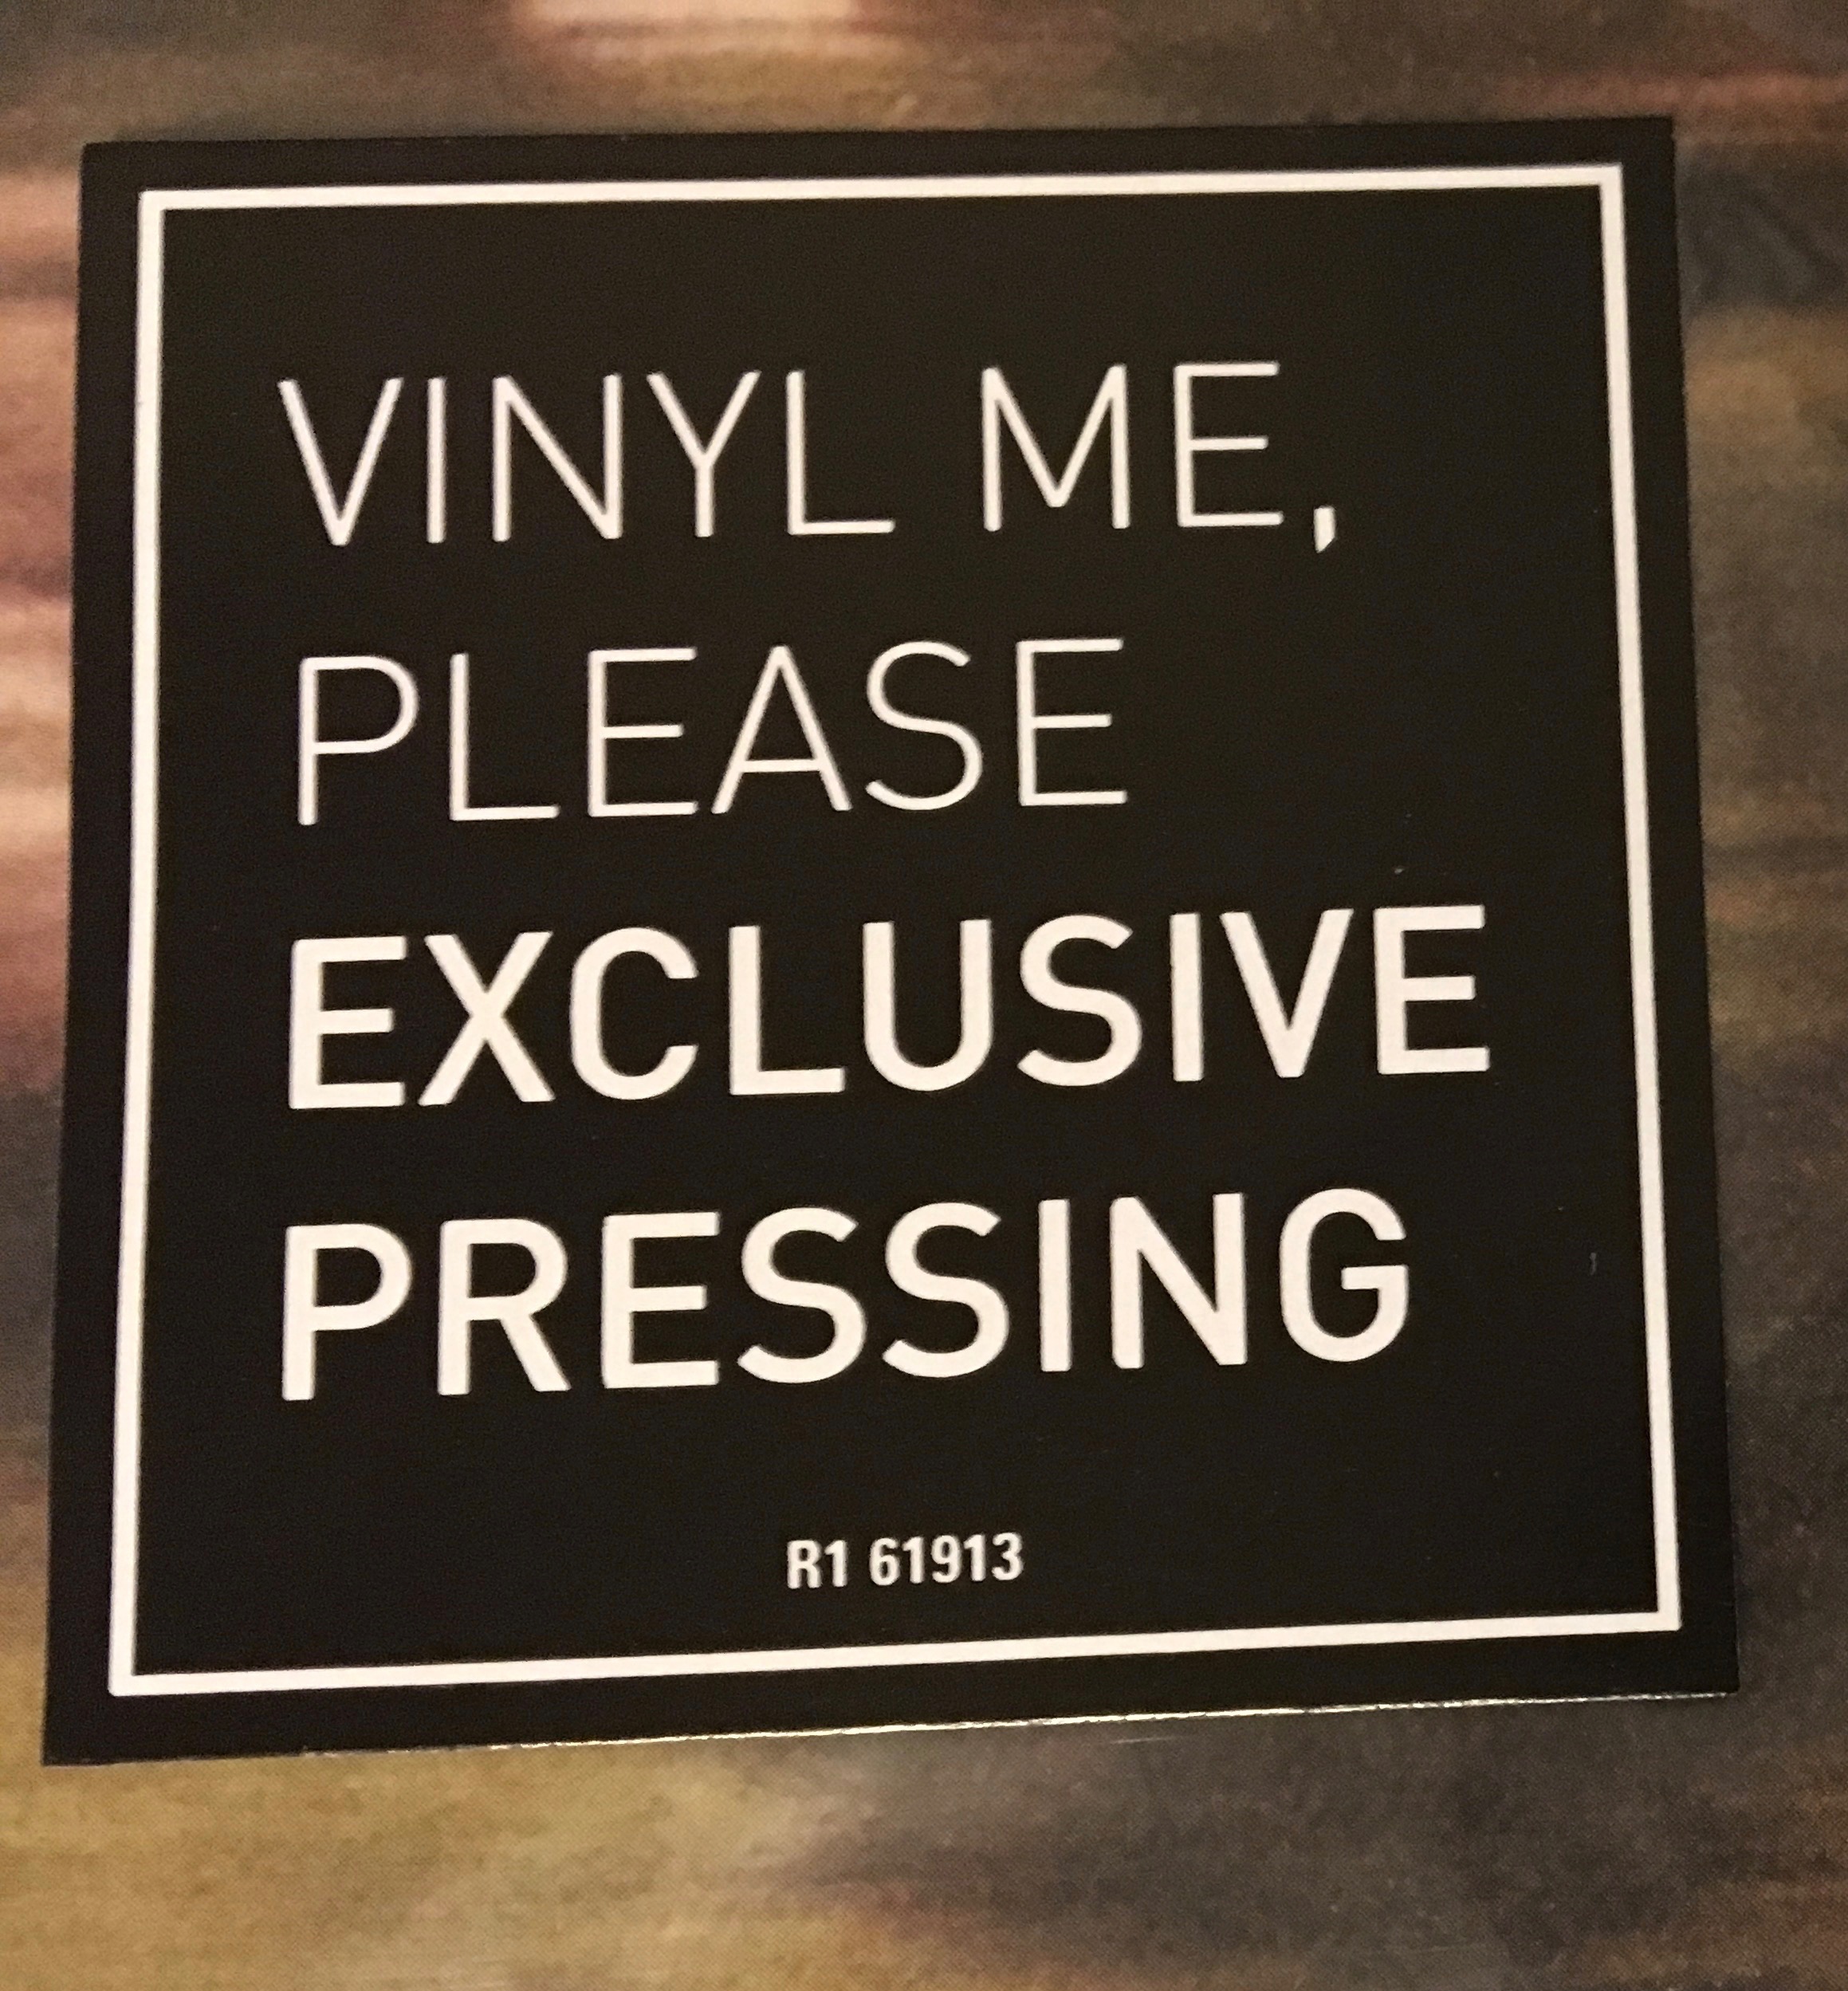 Vinyl me please, exclusive pressing